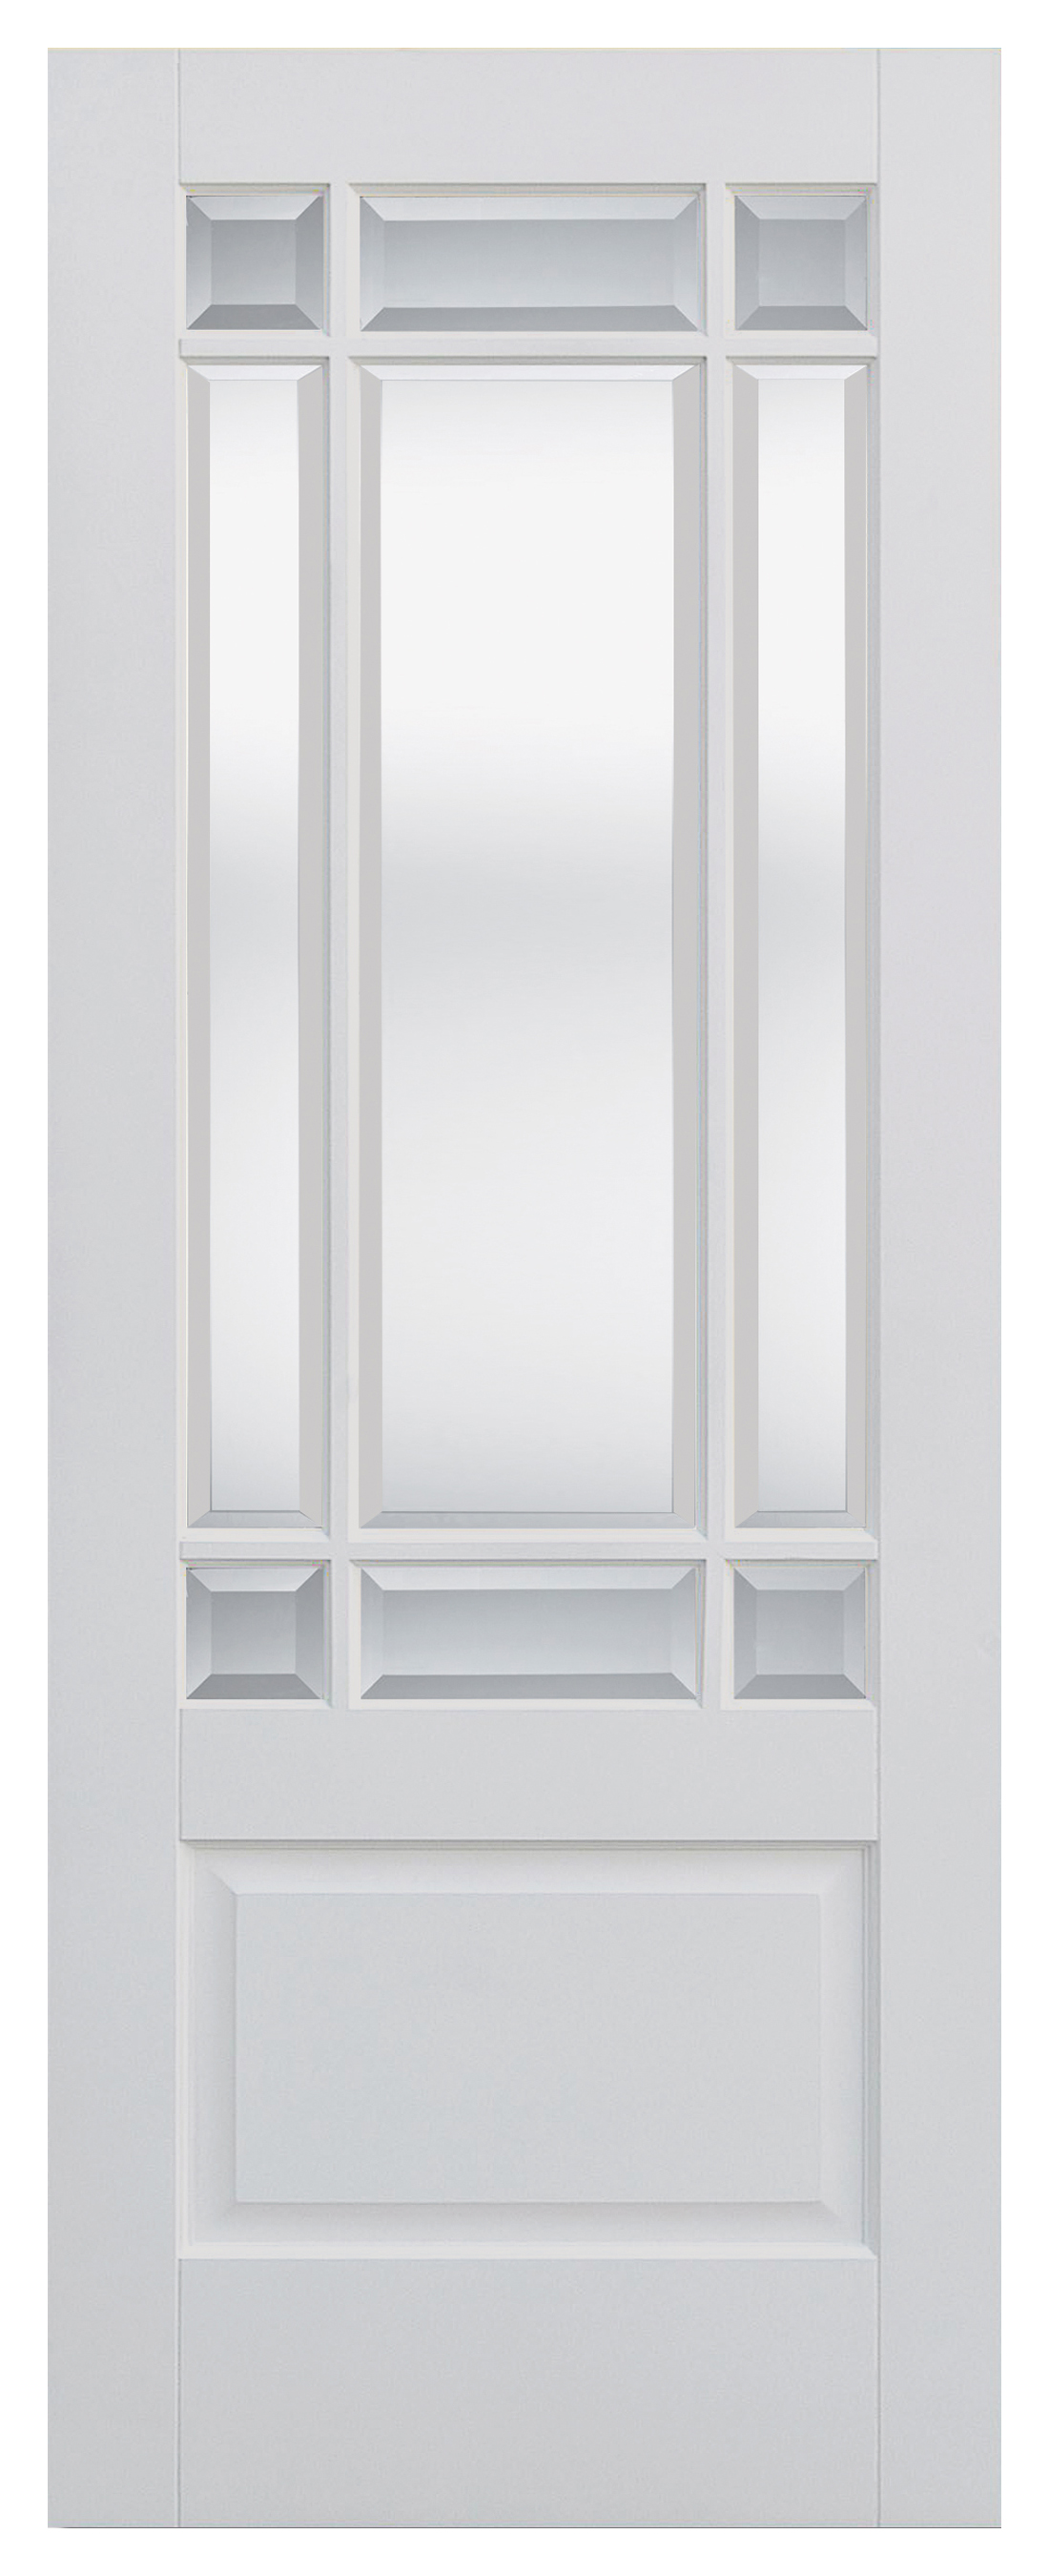 Image of LPD Internal Downham 9 Lite Glazed Primed White Solid Core Door - 826 x 2040mm